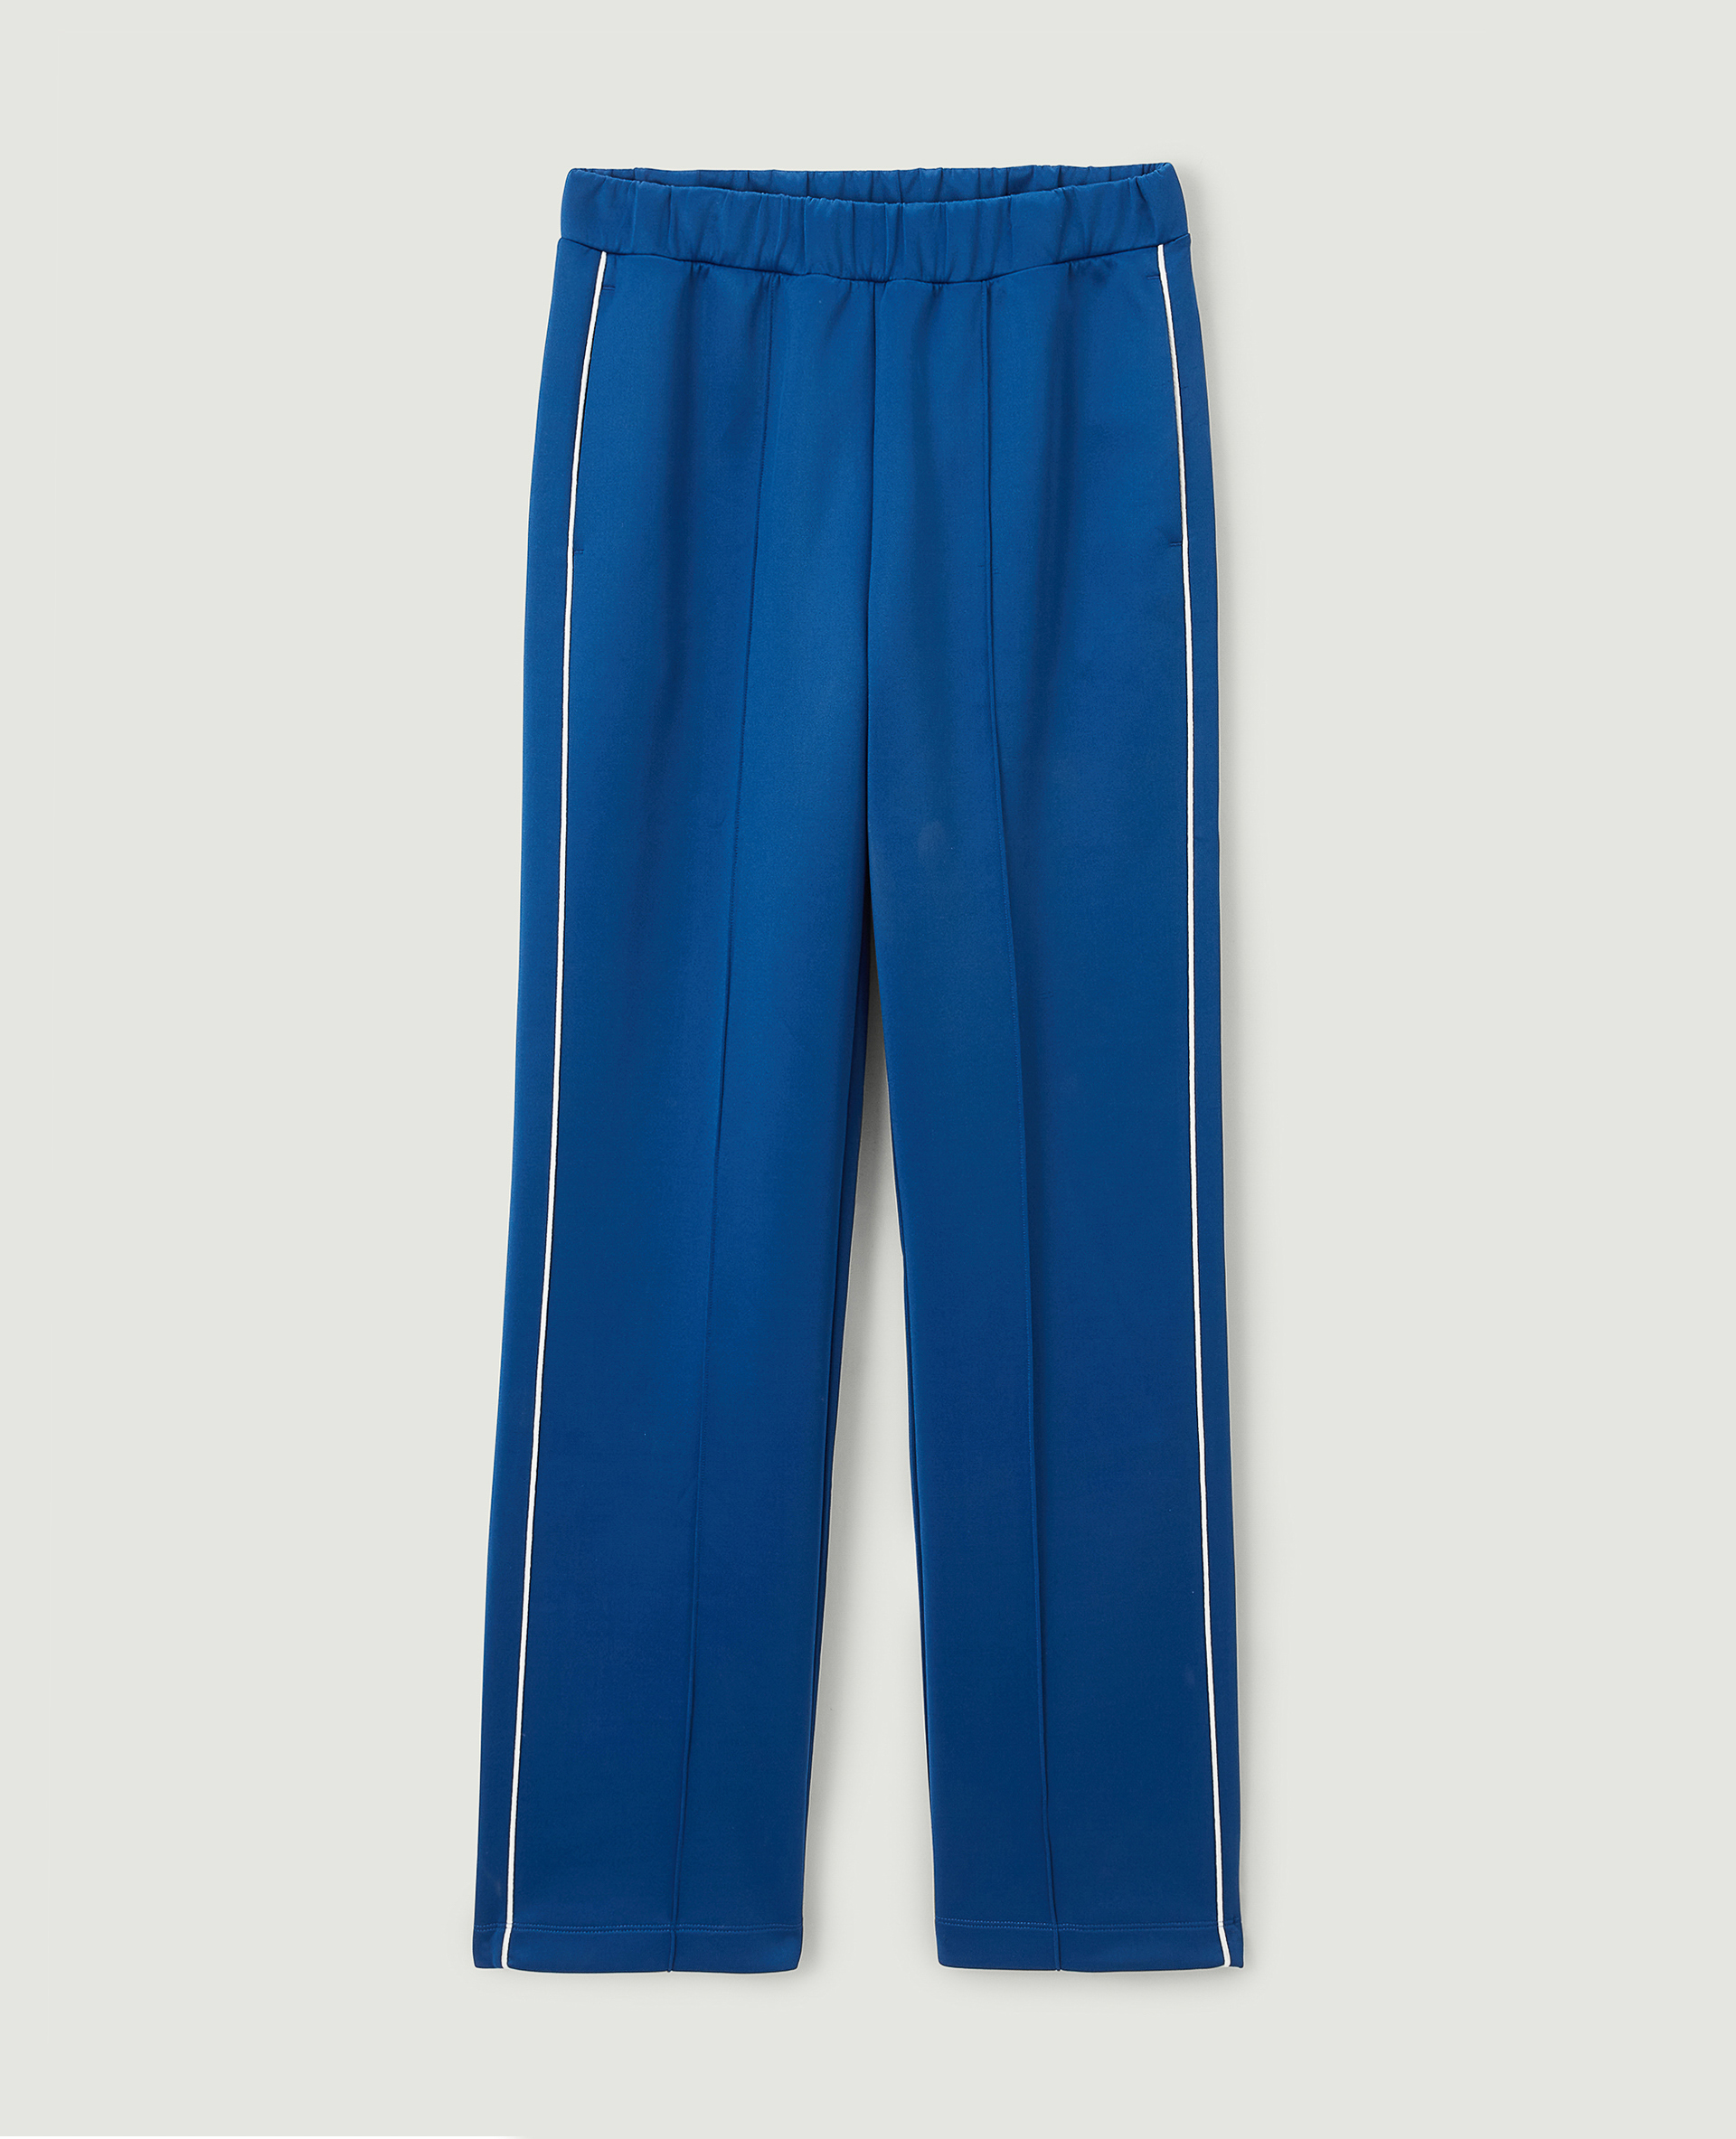 Pantalon de jogging droit bleu - Pimkie